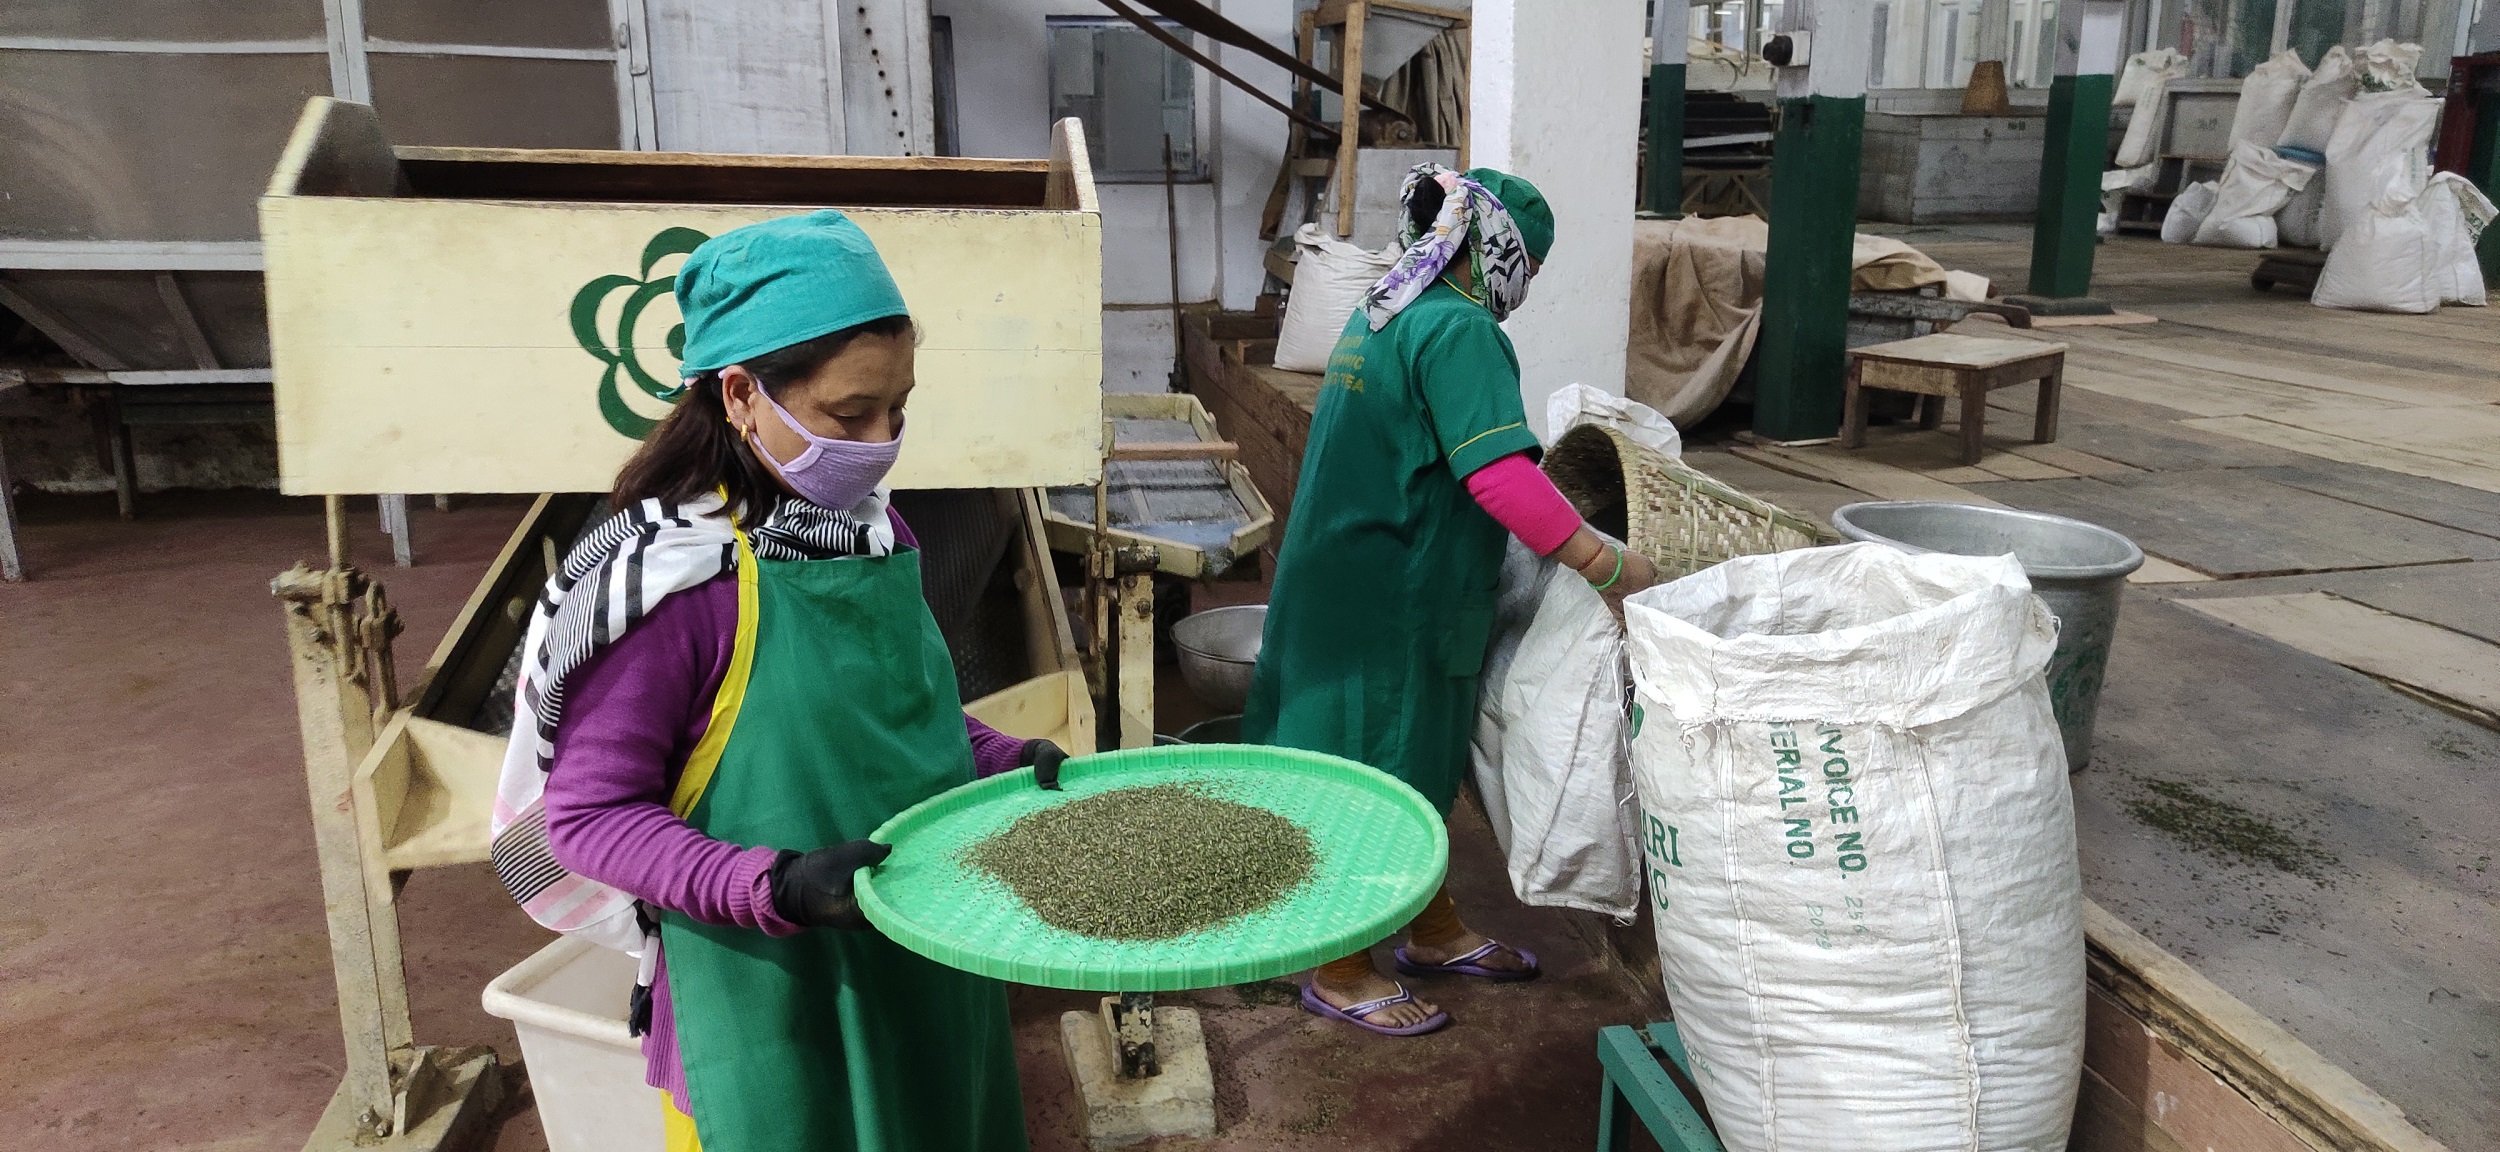 Tea being processed at the factory of Makaibari tea estate (image: Gurvinder Singh)